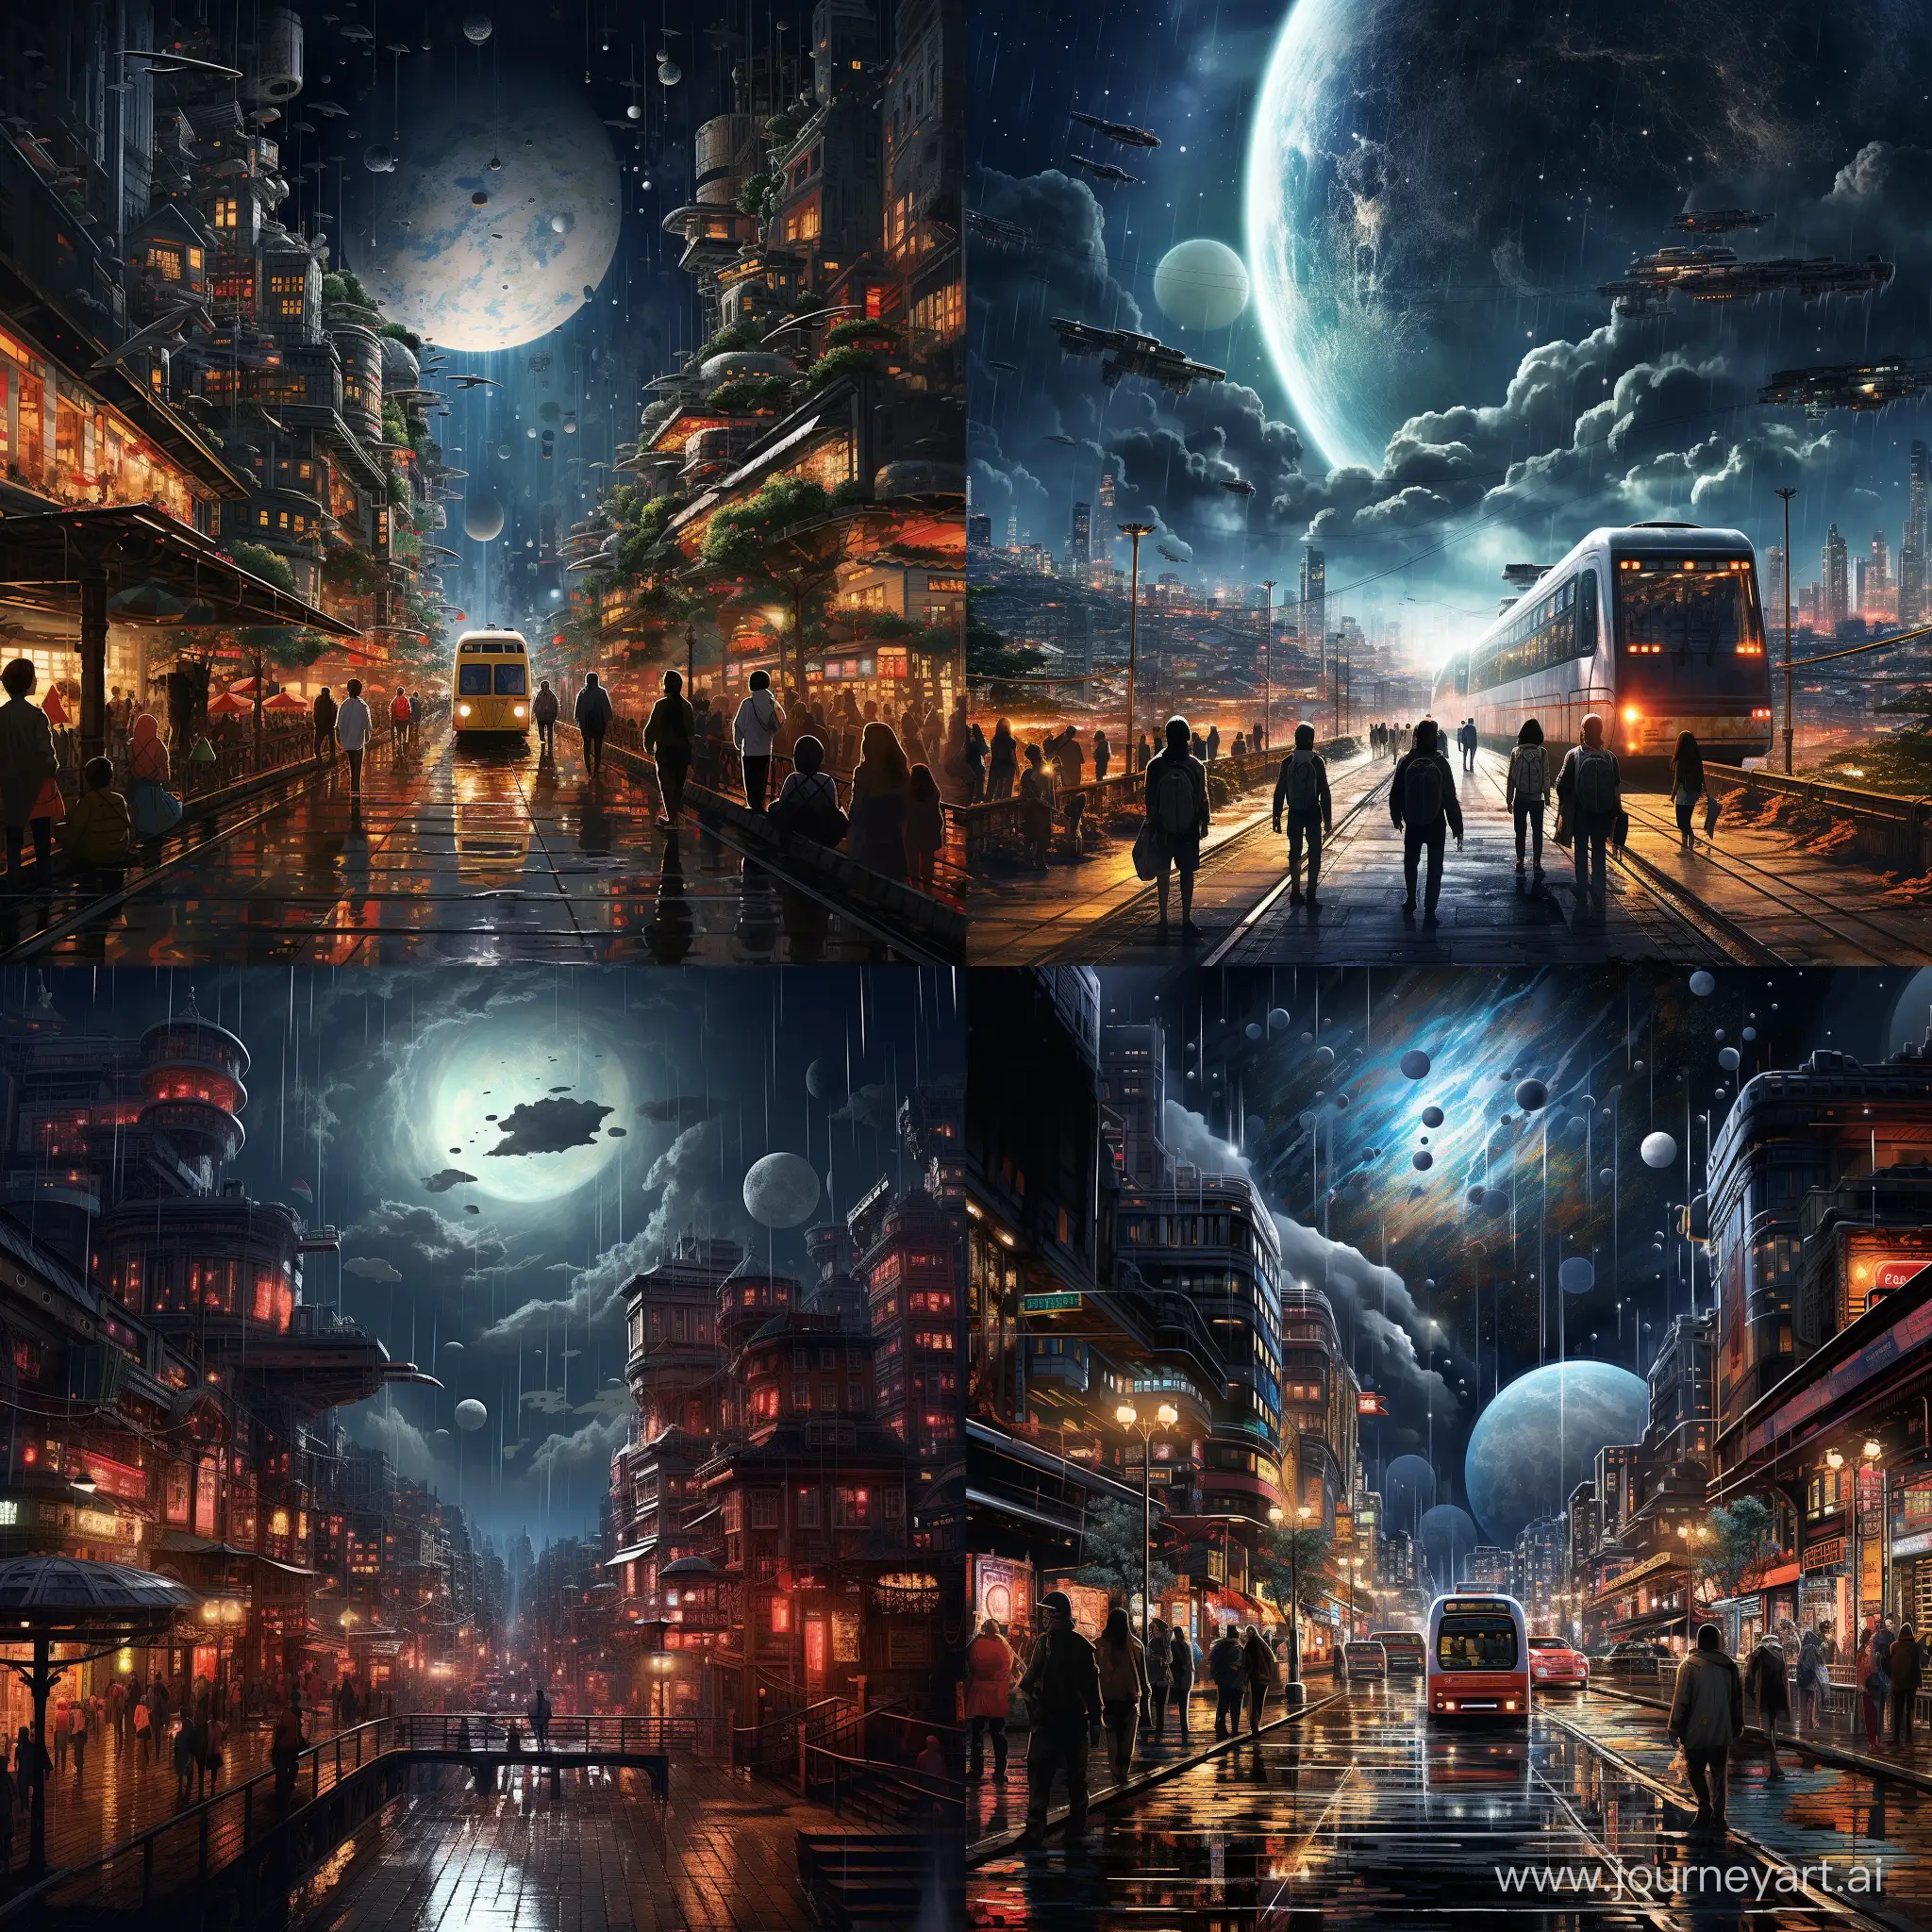 Rainy-Night-in-Cyber-City-Moonlit-Urban-Hustle